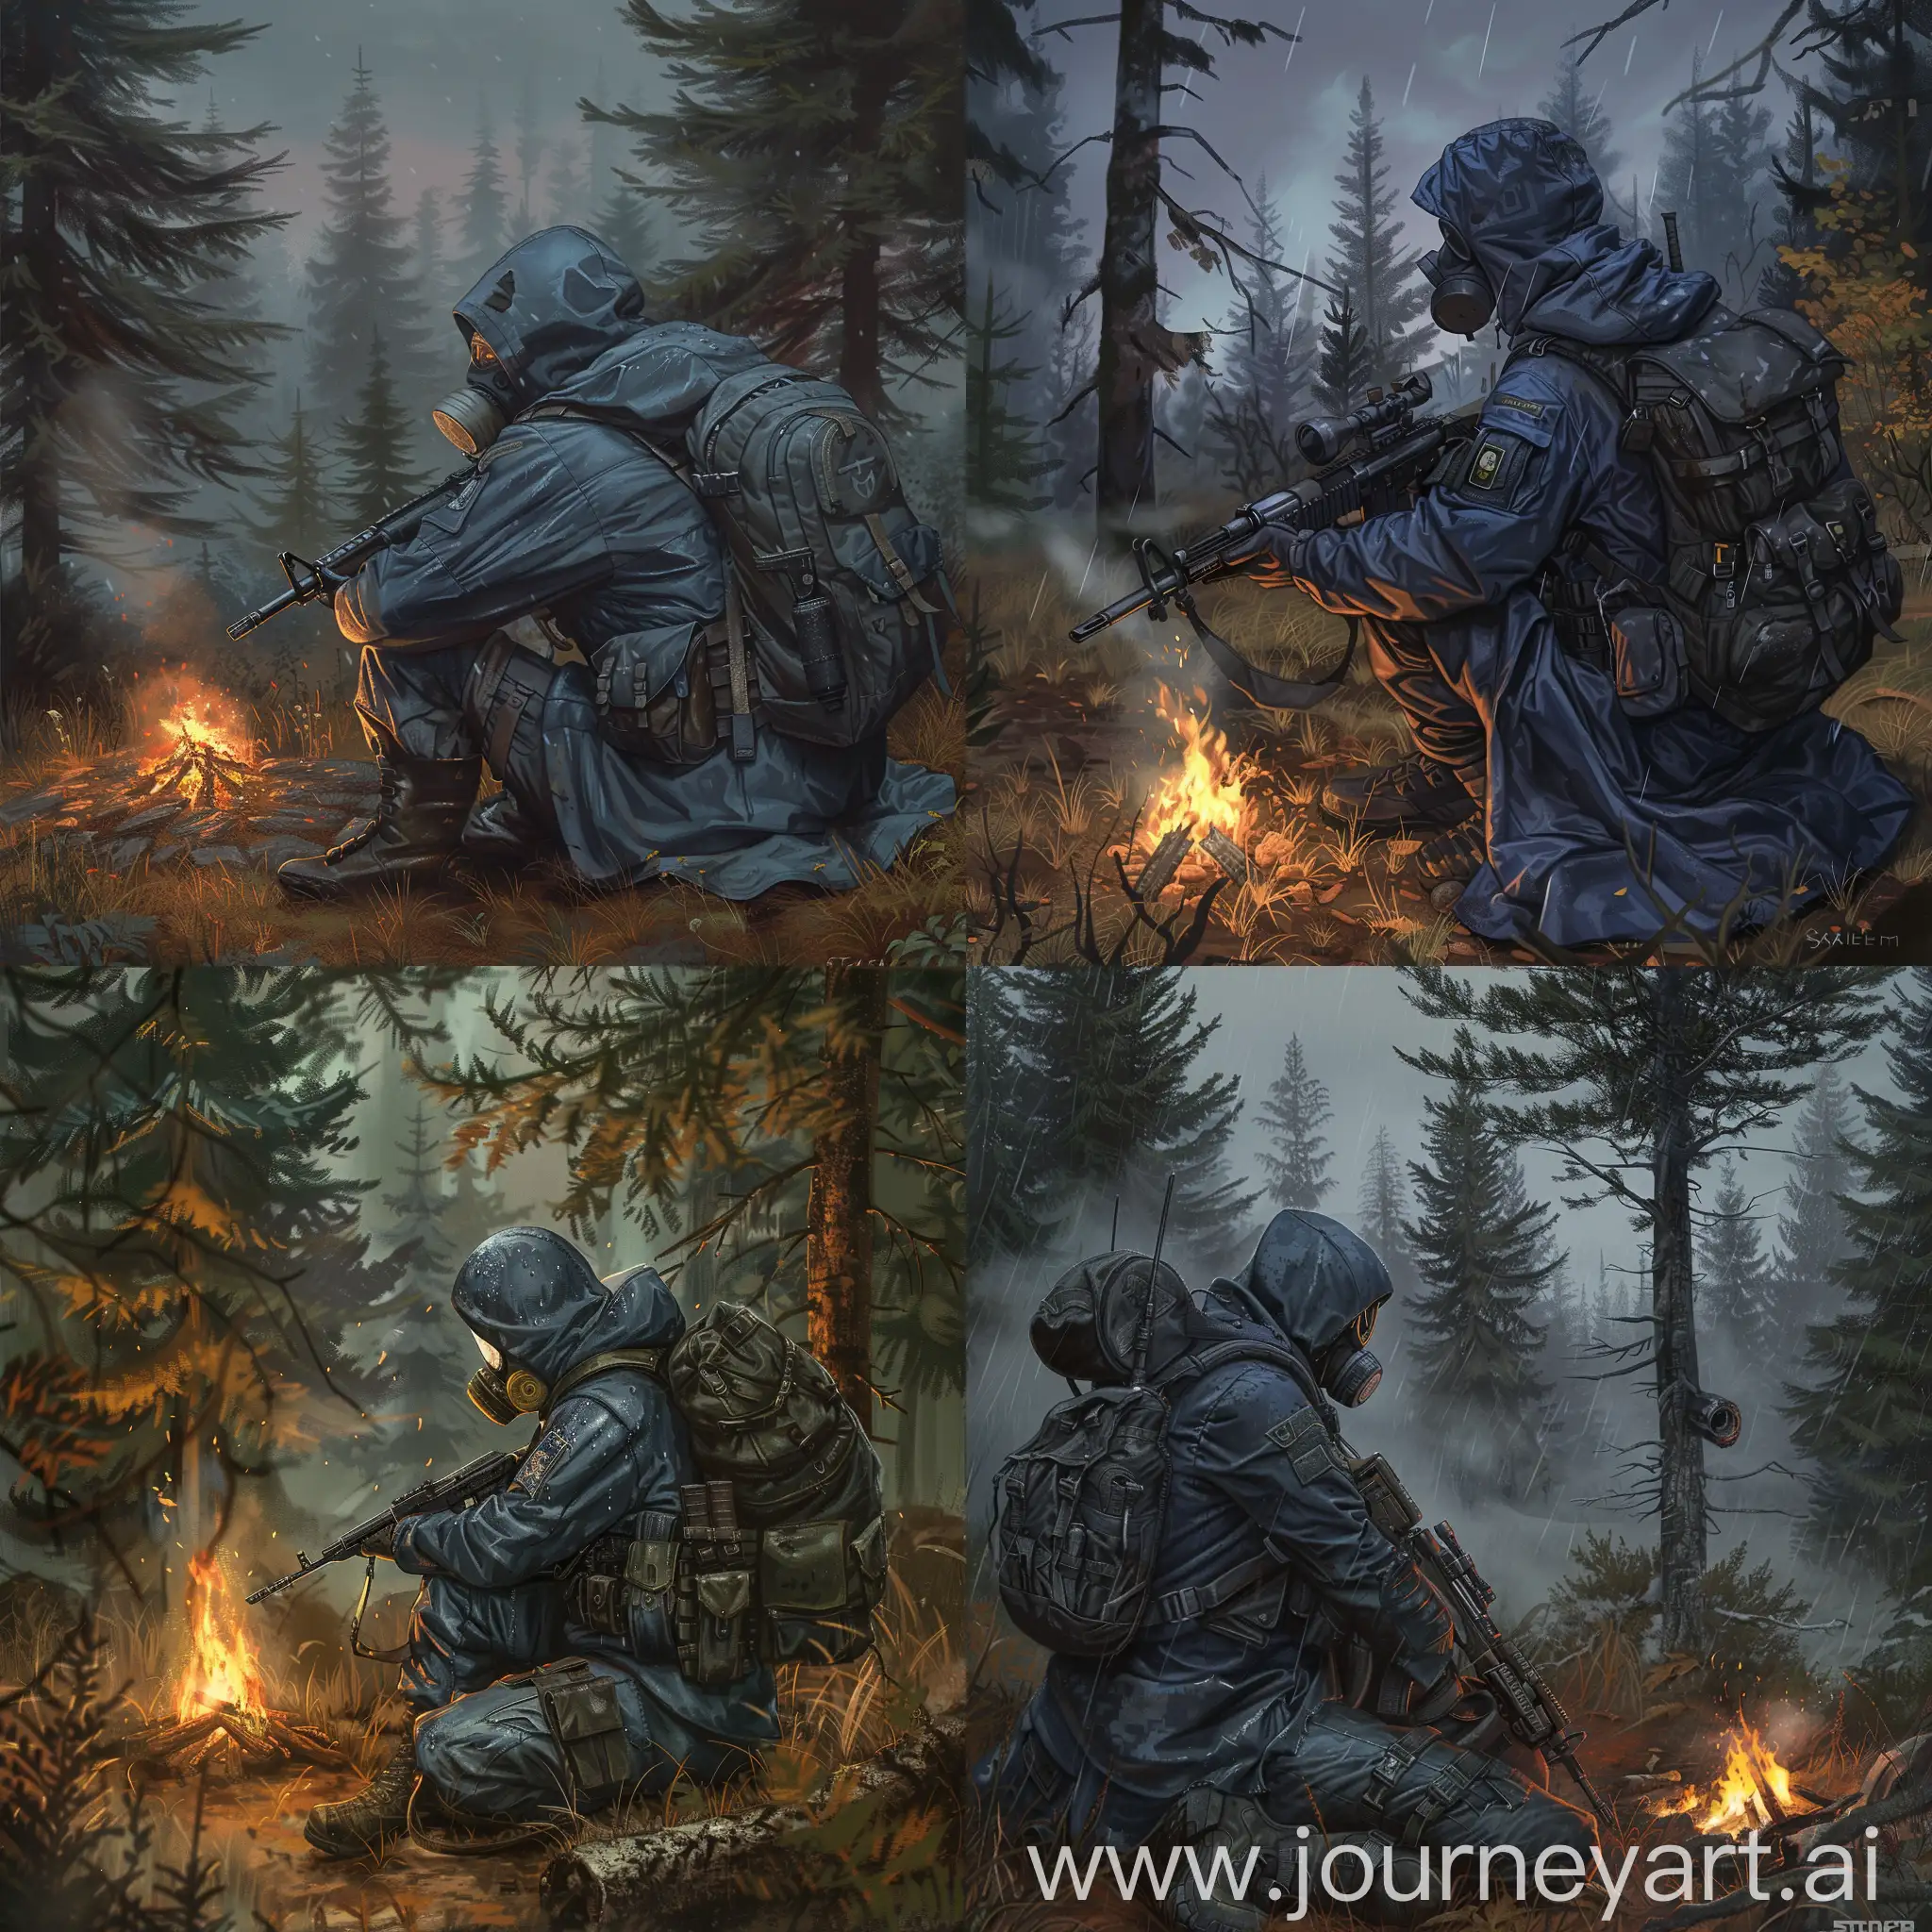 Lone-Mercenary-in-STALKER-Universe-Campfire-Vigil-in-Gloomy-Autumn-Pine-Forest